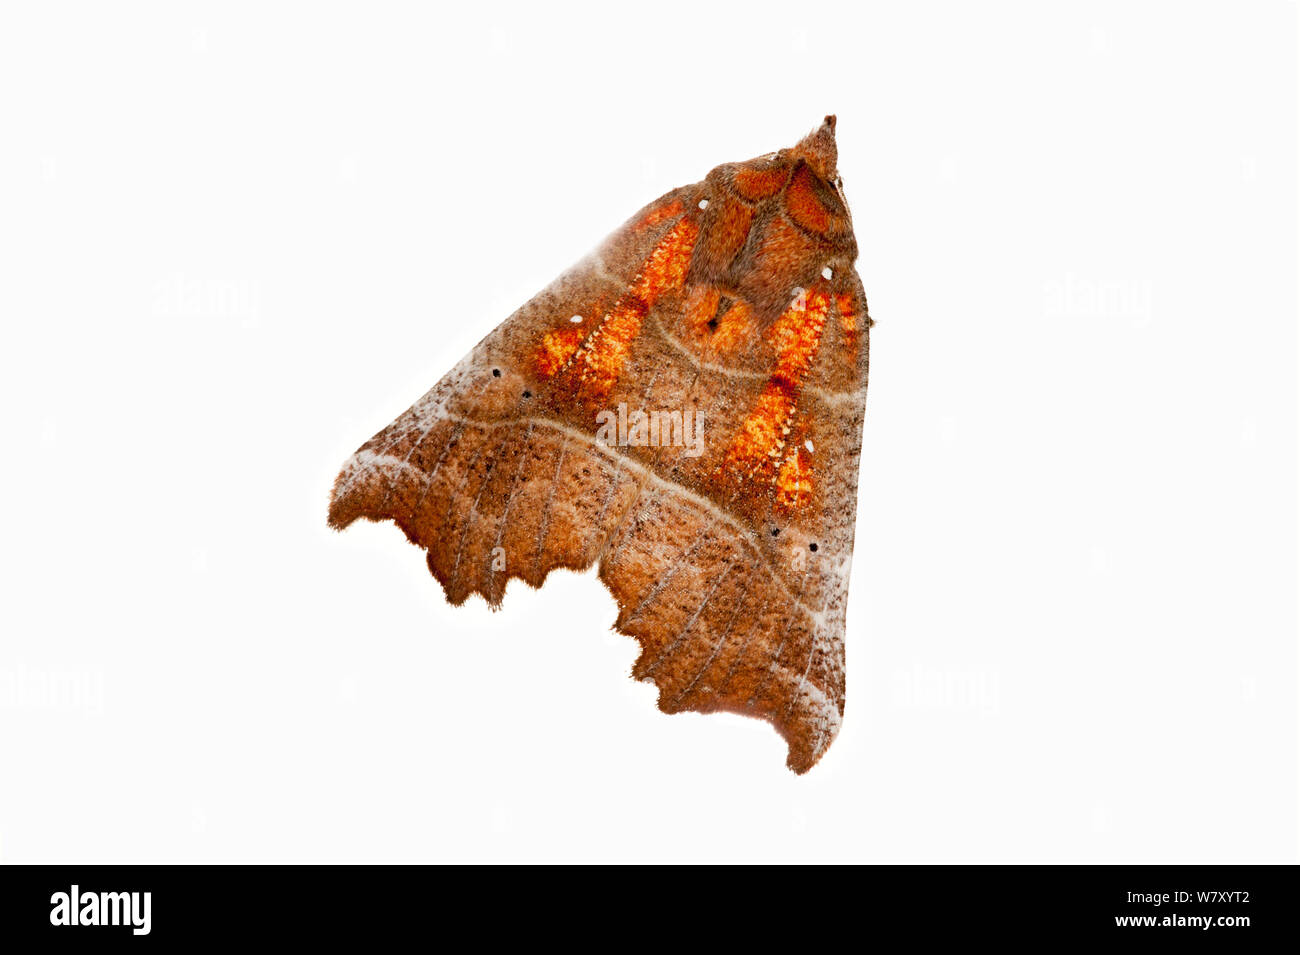 Herald moth (Scoliopteryx libatrix), Hauenstein, Rhénanie-Palatinat, Allemagne, février. meetyourneighbors.net project Banque D'Images